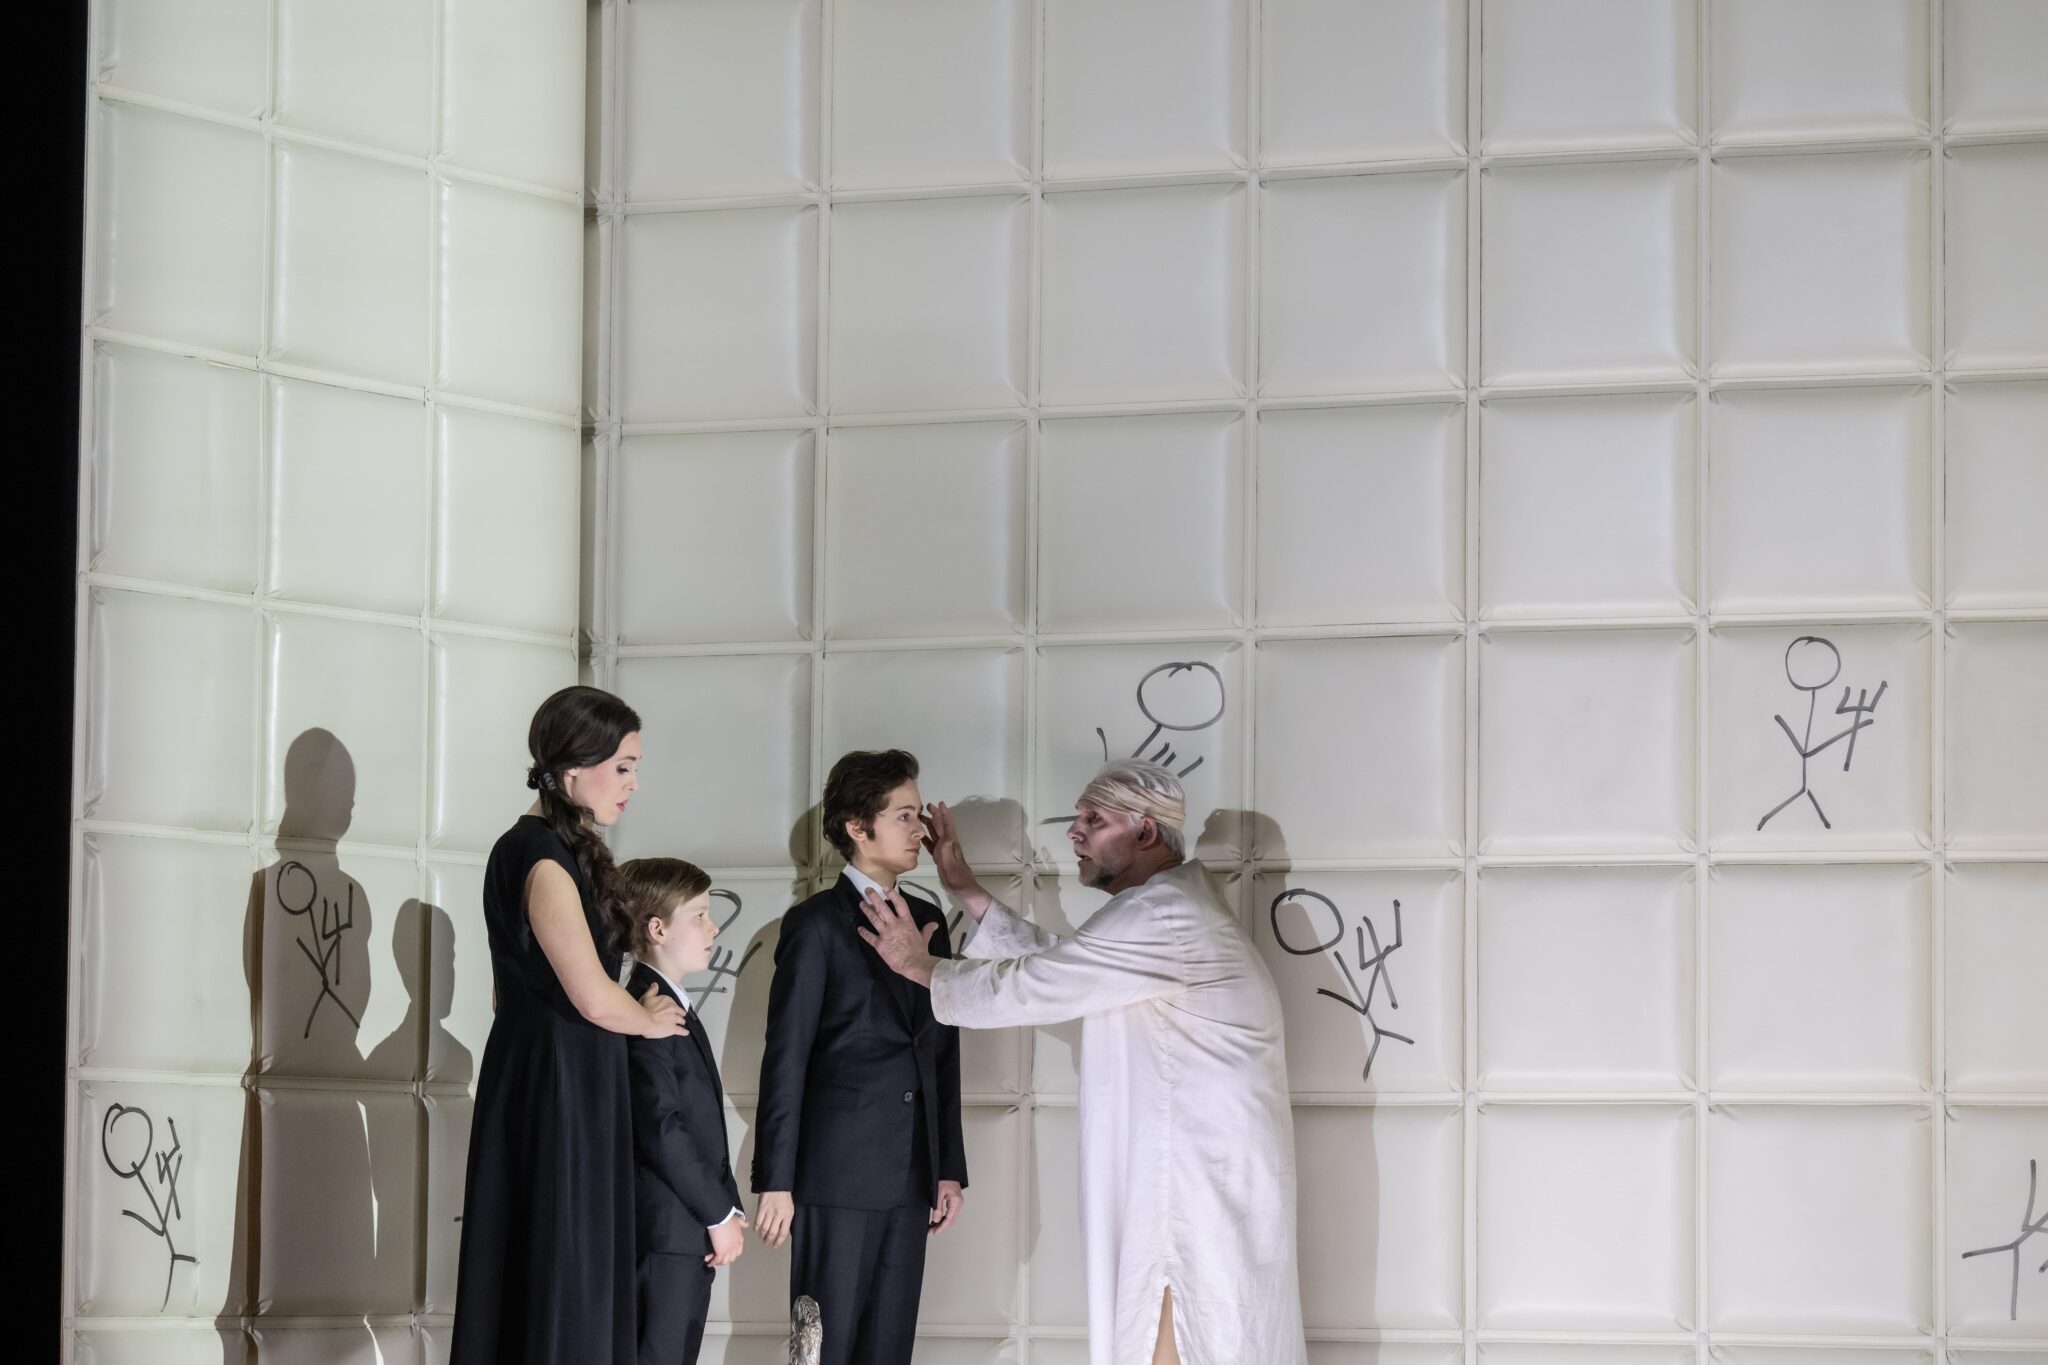 Szenenbild aus Mozarts „Idomeneo“ an der Oper Köln